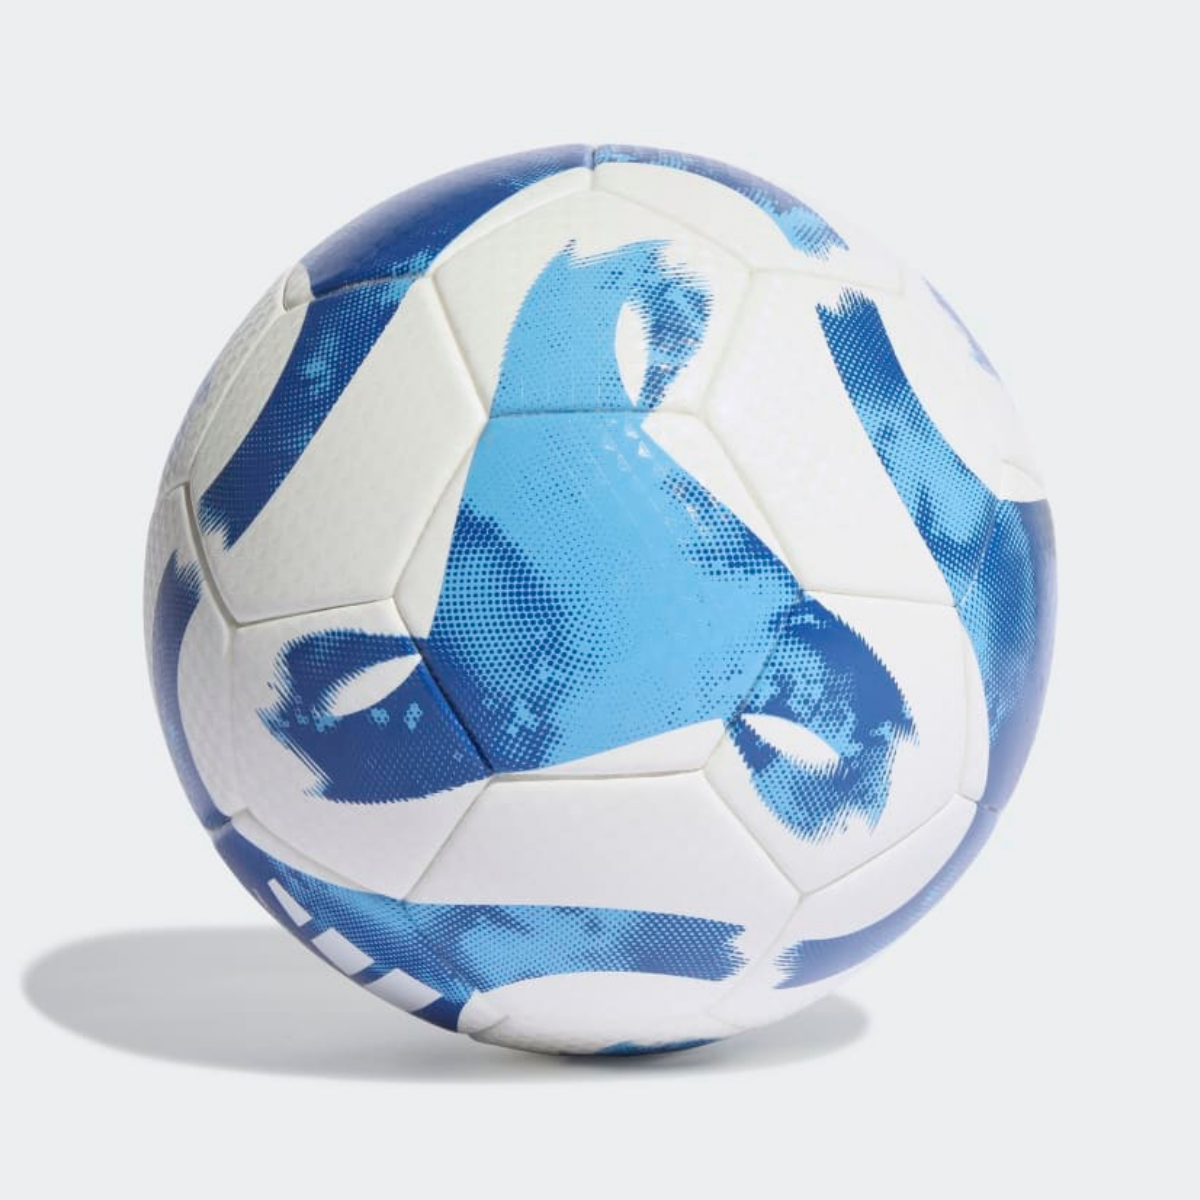 Adidas Tiro League Thermally Bonded FootBall -White/Royal Blue/Light Blue